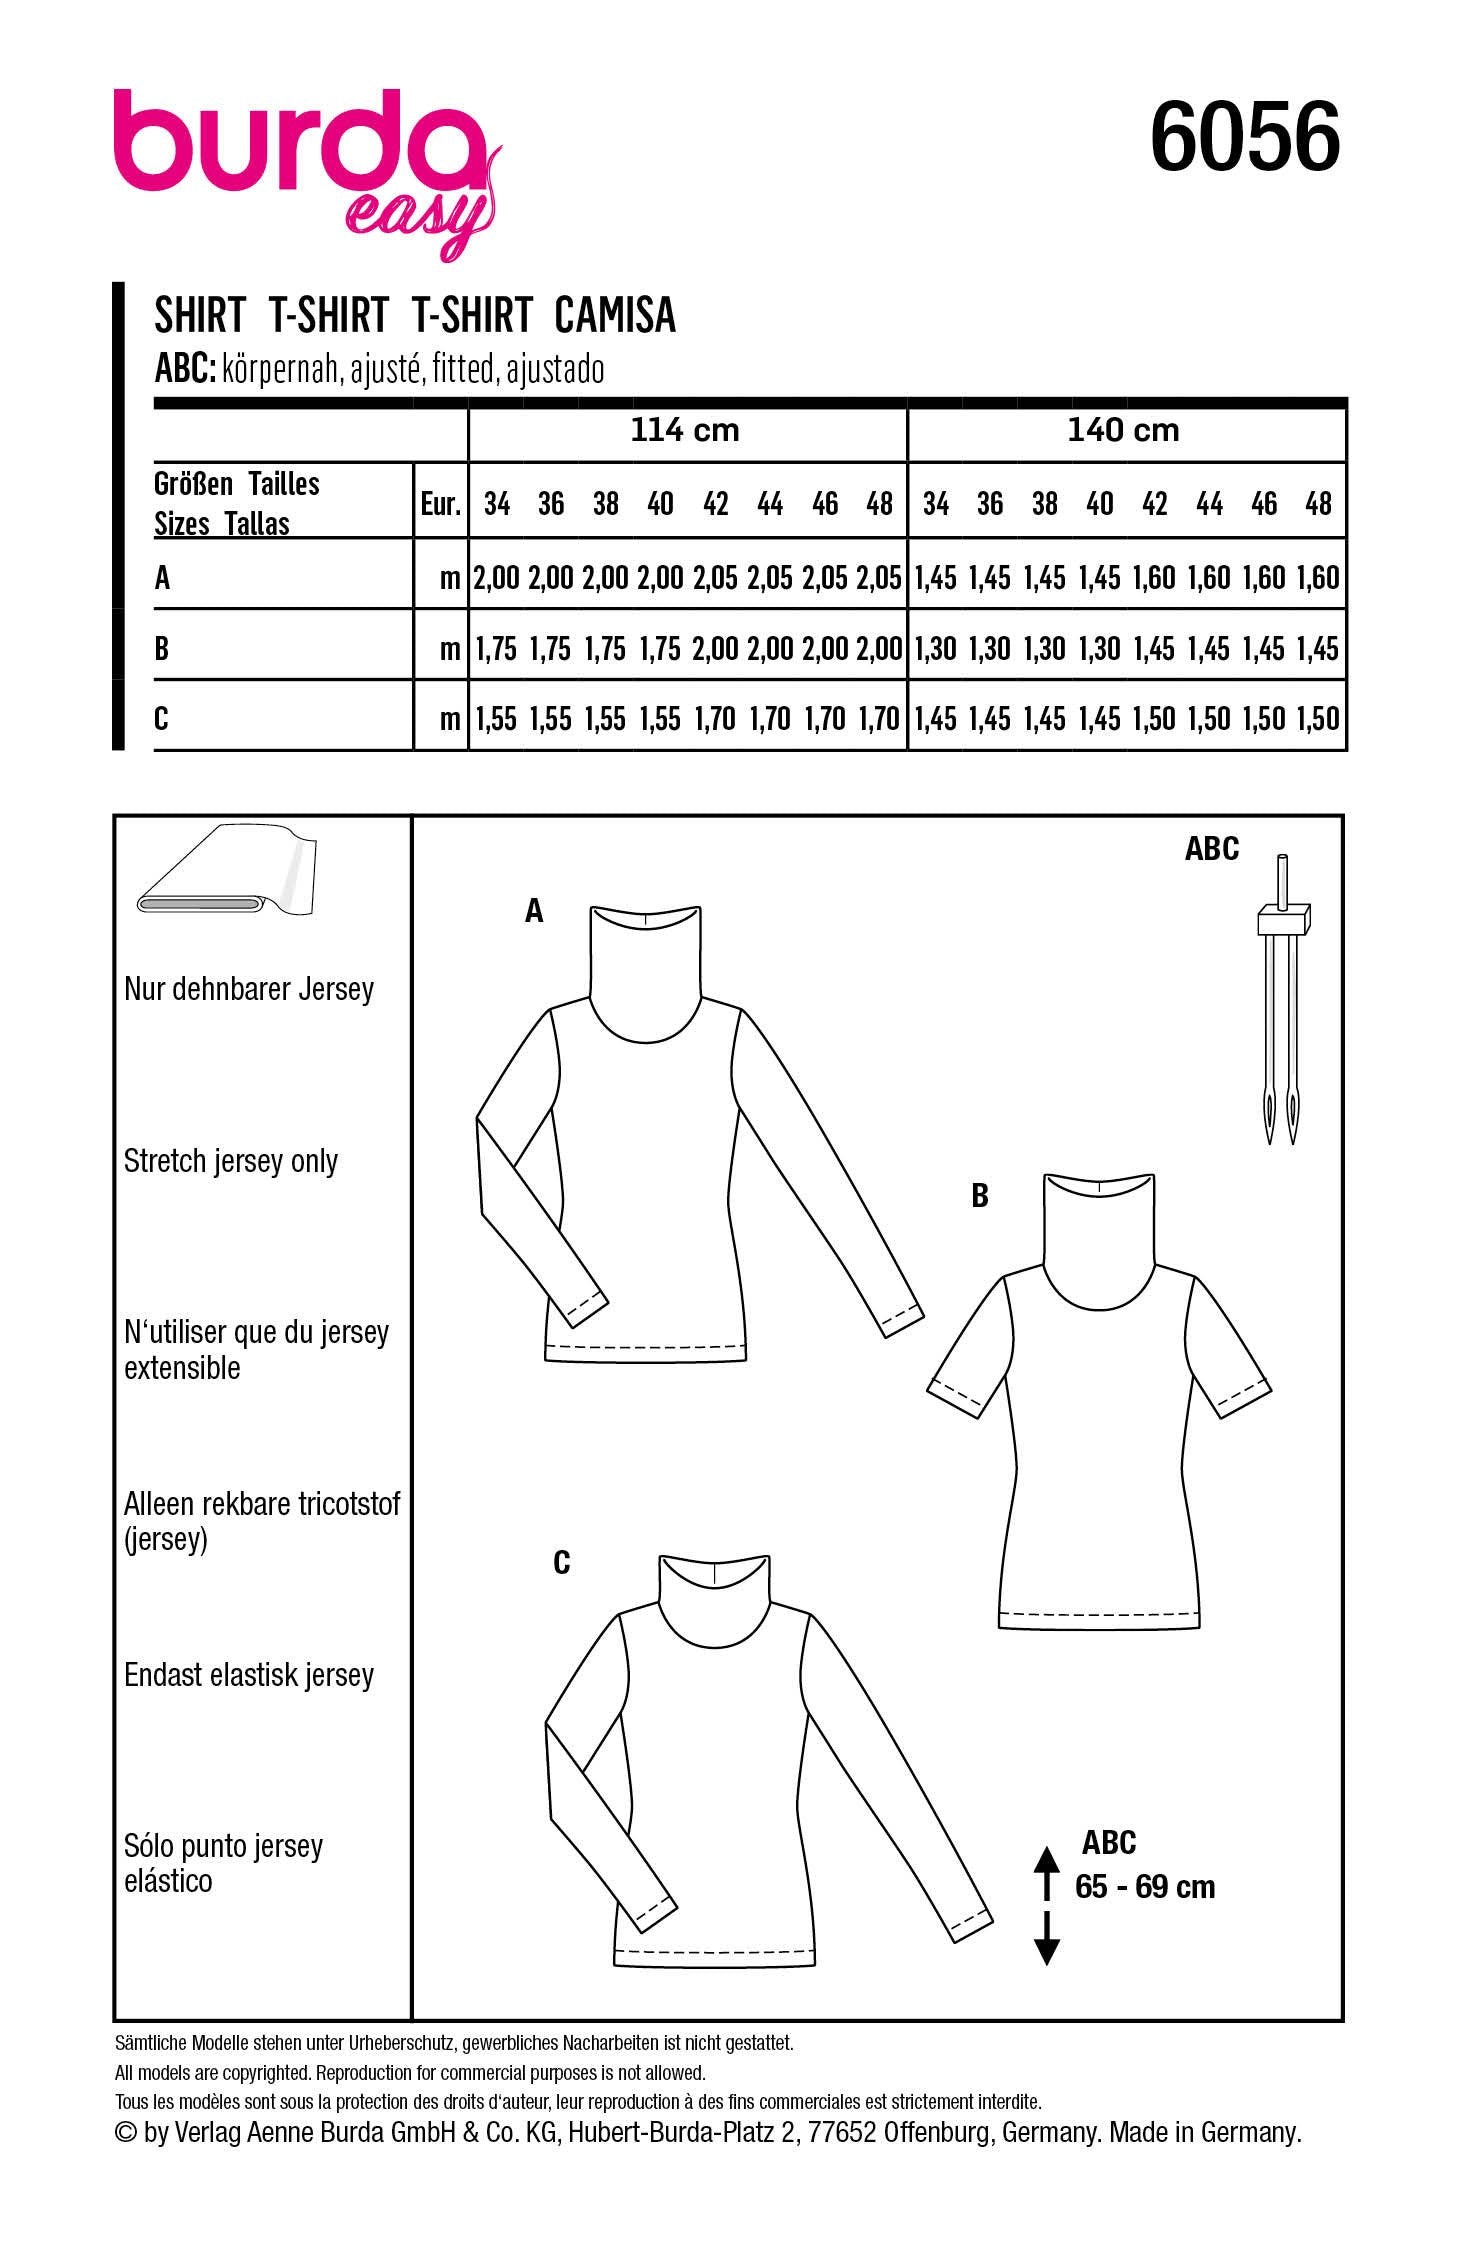 Burda Sewing Pattern 6056 Turtleneck Top from Jaycotts Sewing Supplies